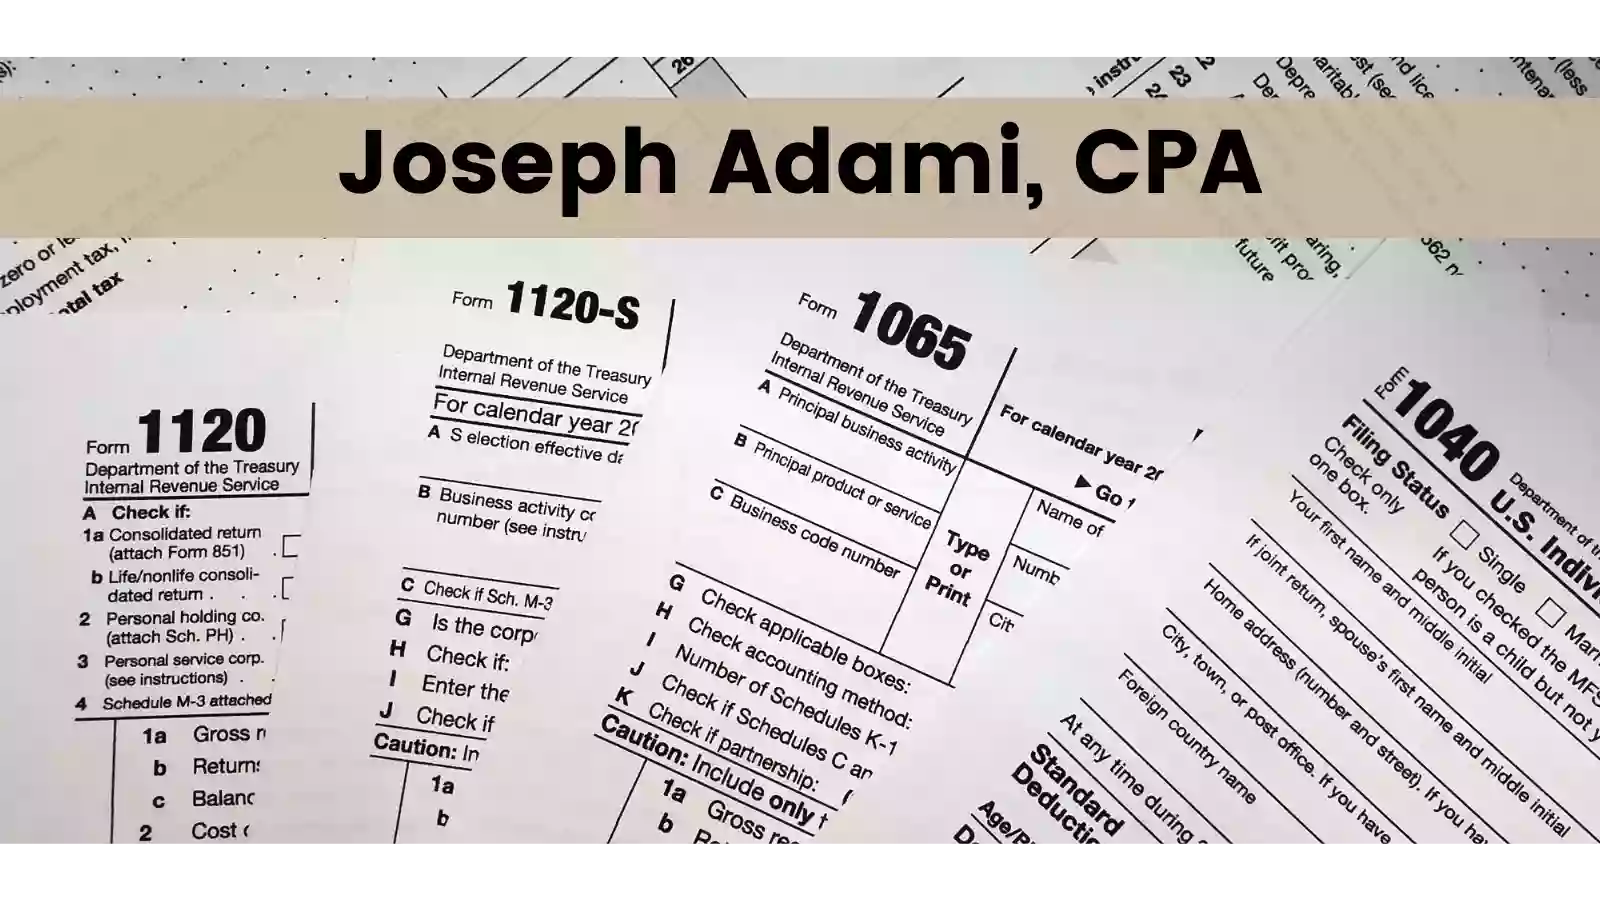 Joseph Adami, CPA